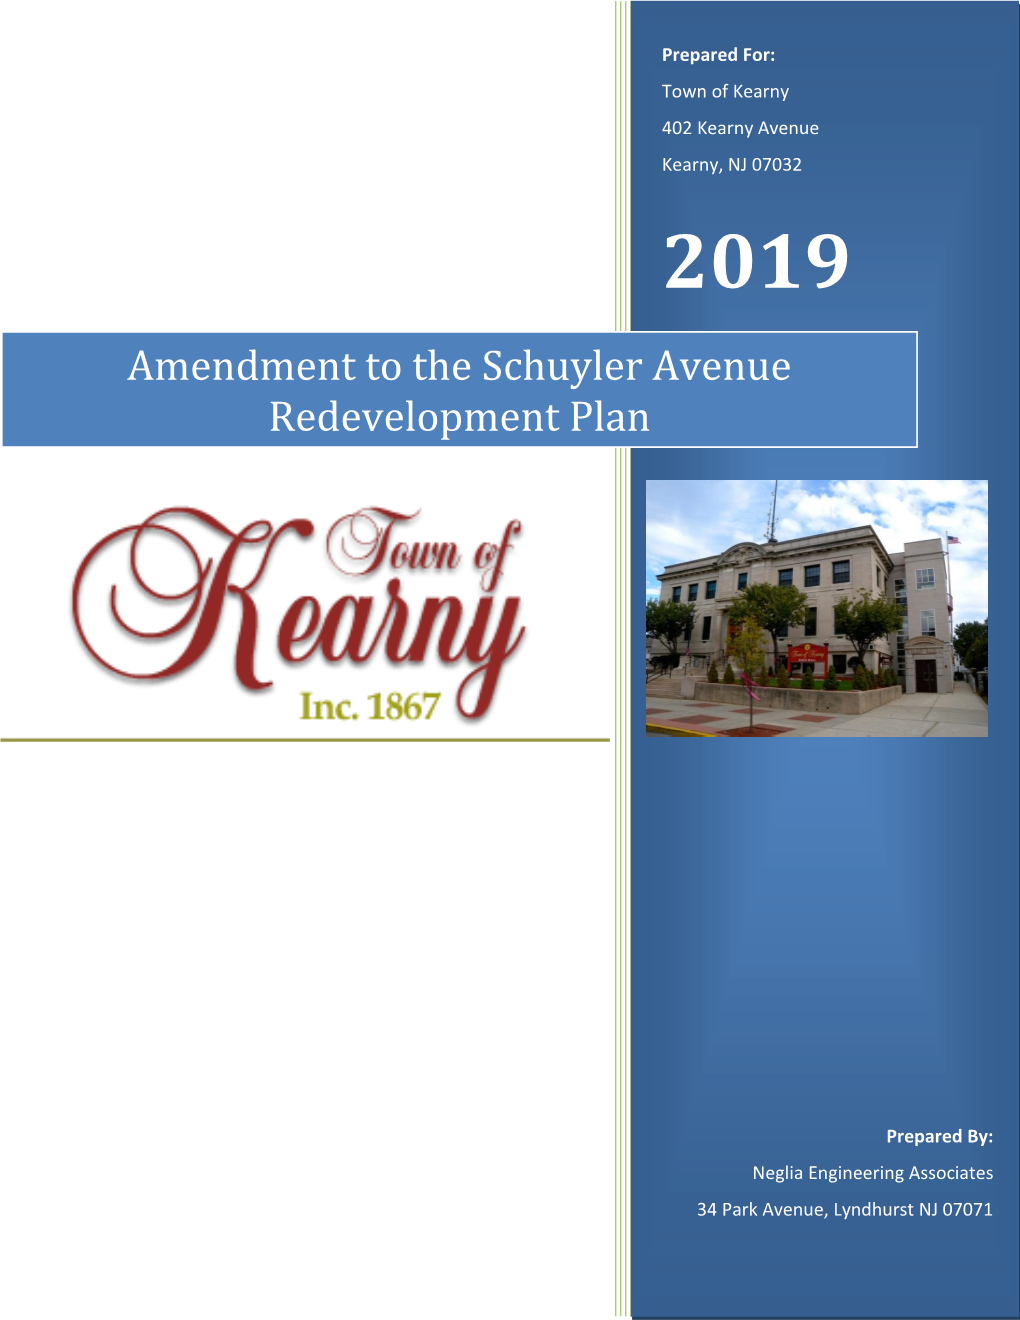 Amended Schuyler Avenue Redevelopment Plan